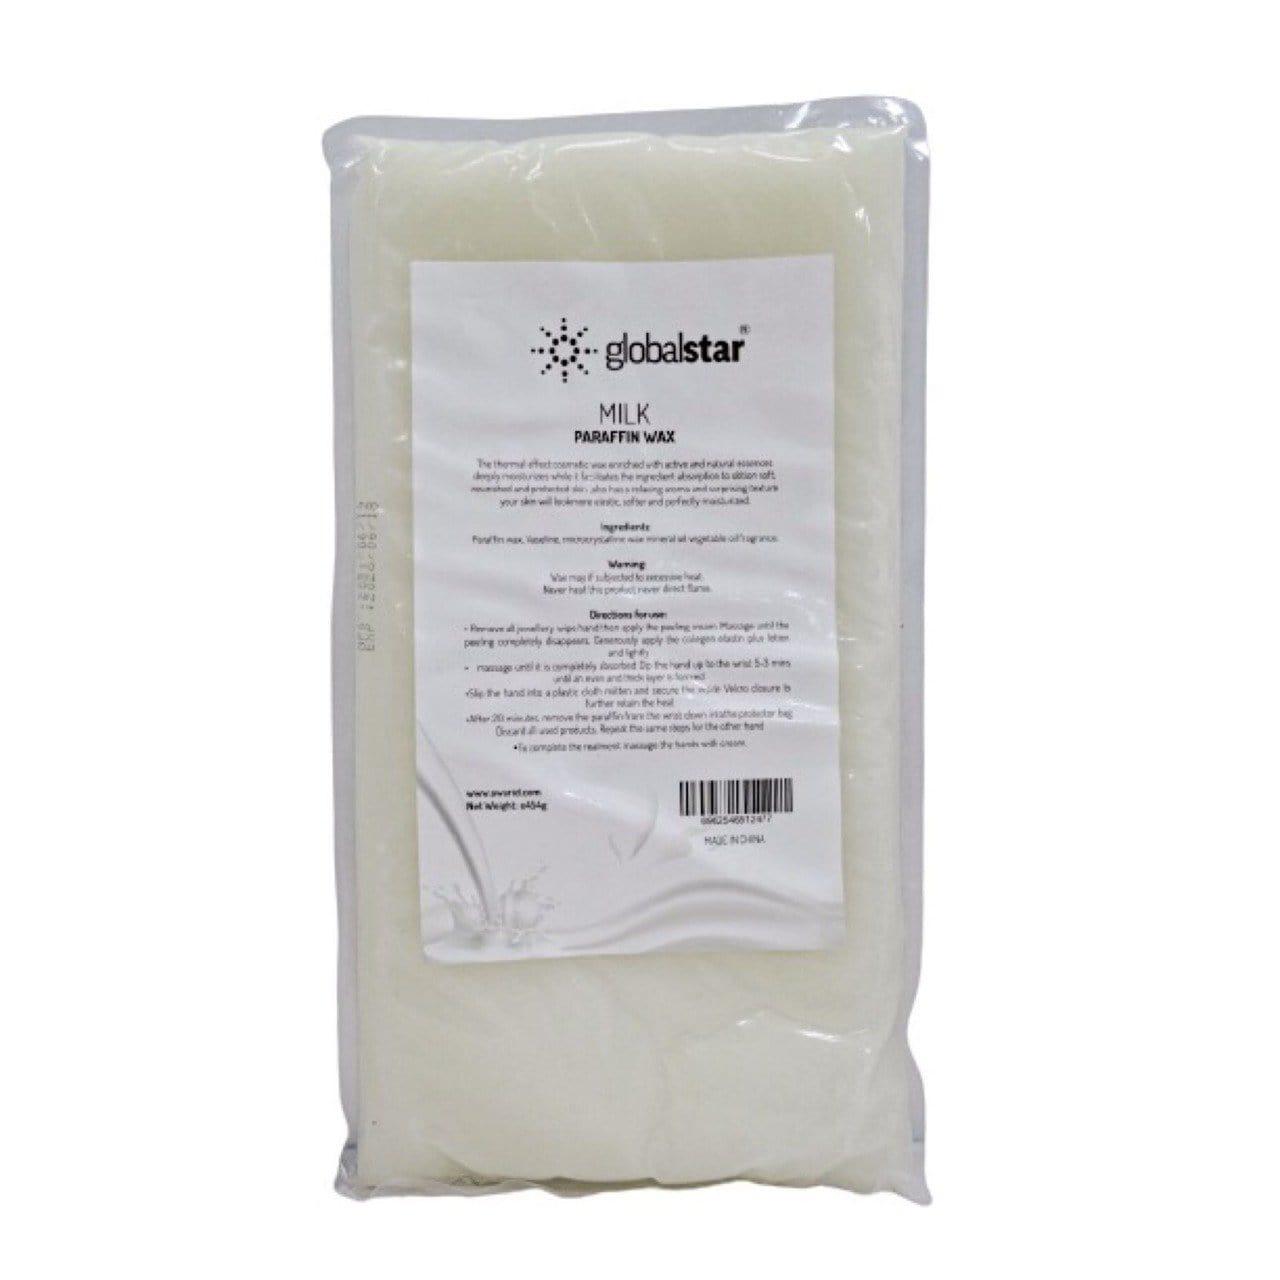 Globalstar Paraffin Wax Milk 454g - Awarid UAE